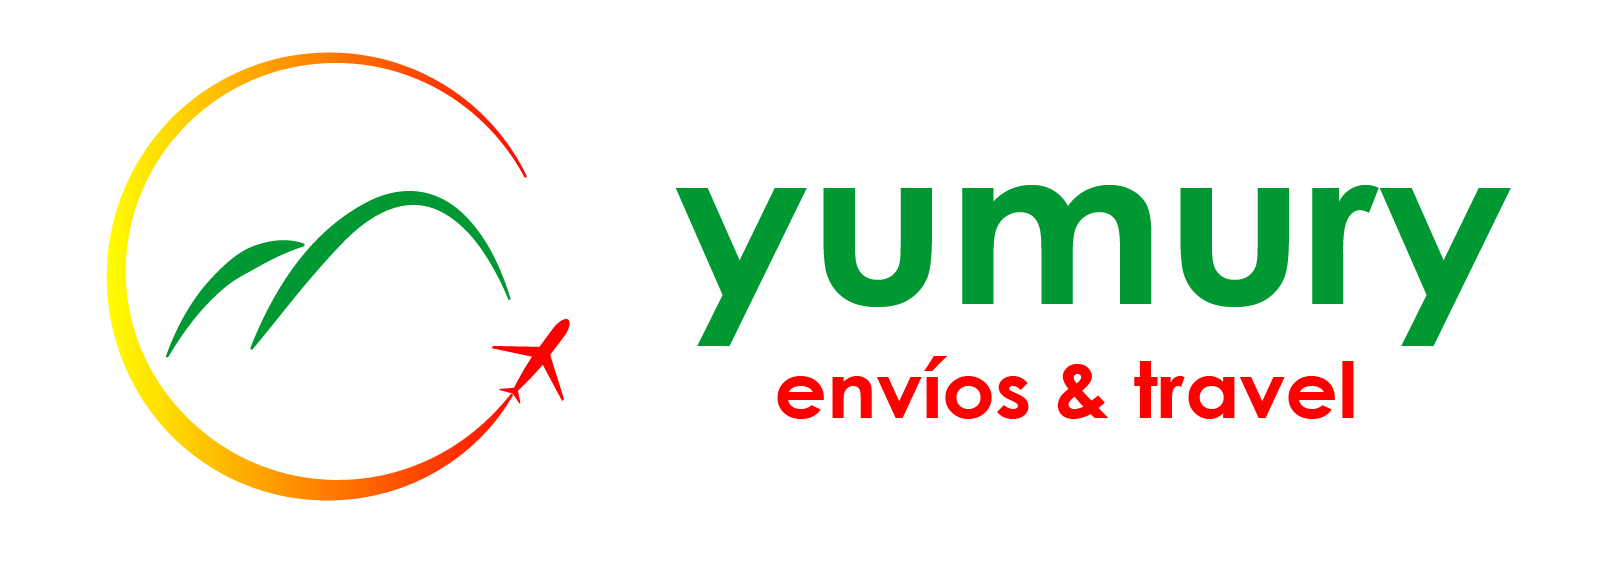 Yumury envíos & travel